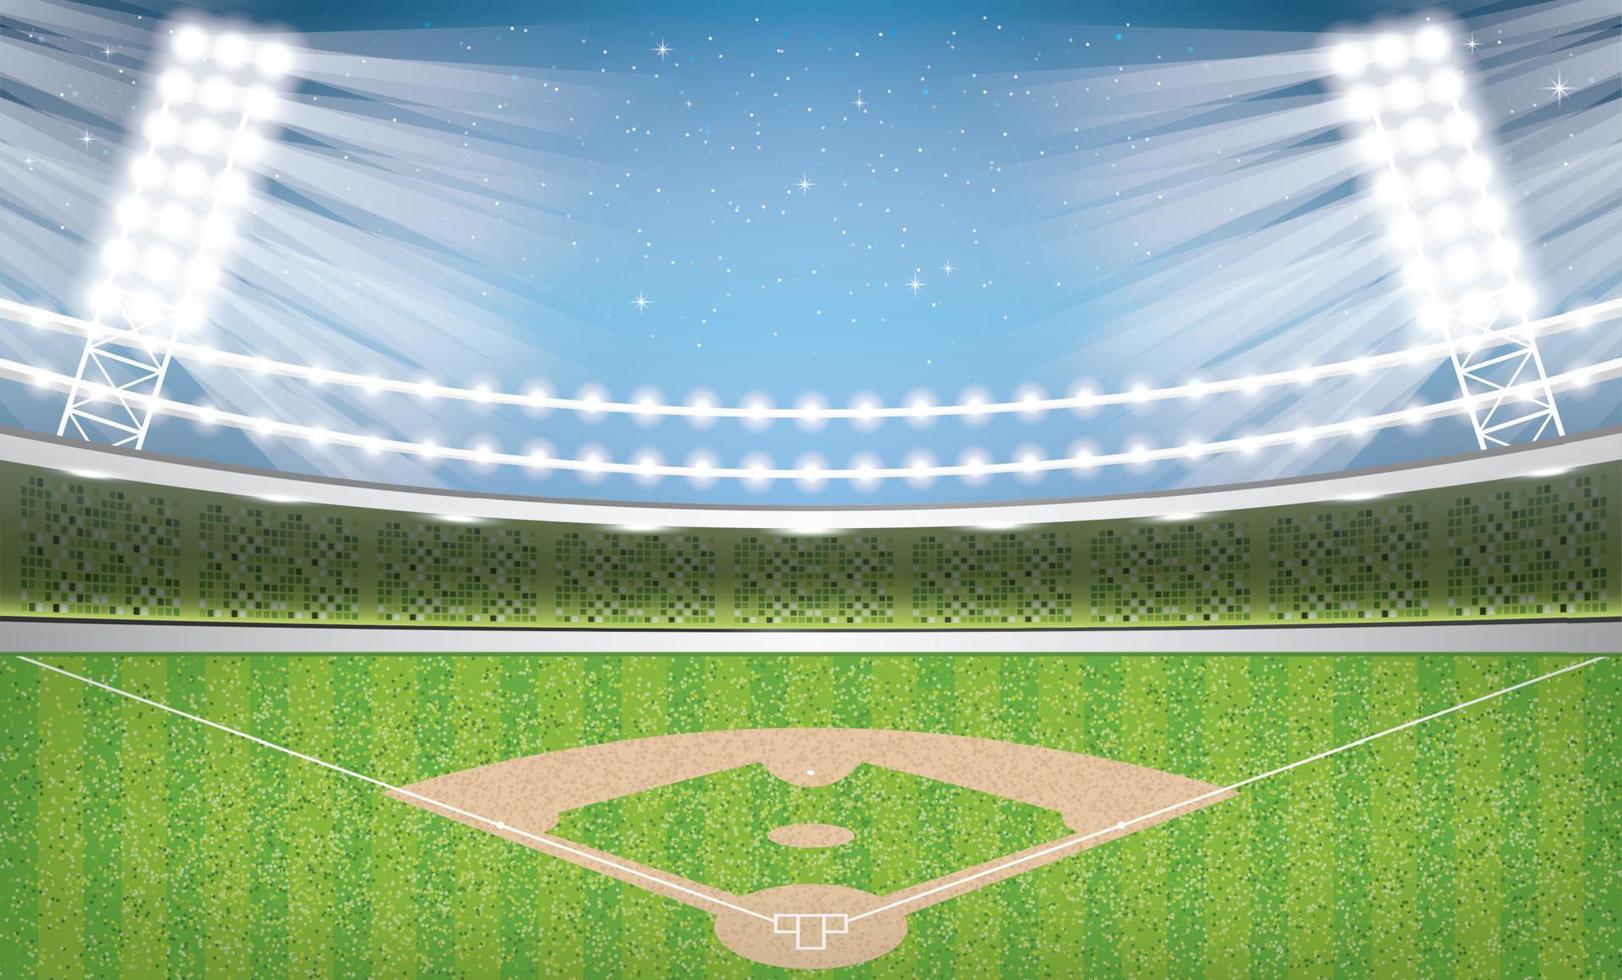 Baseball Stadium with Neon Lights. Arena. vector